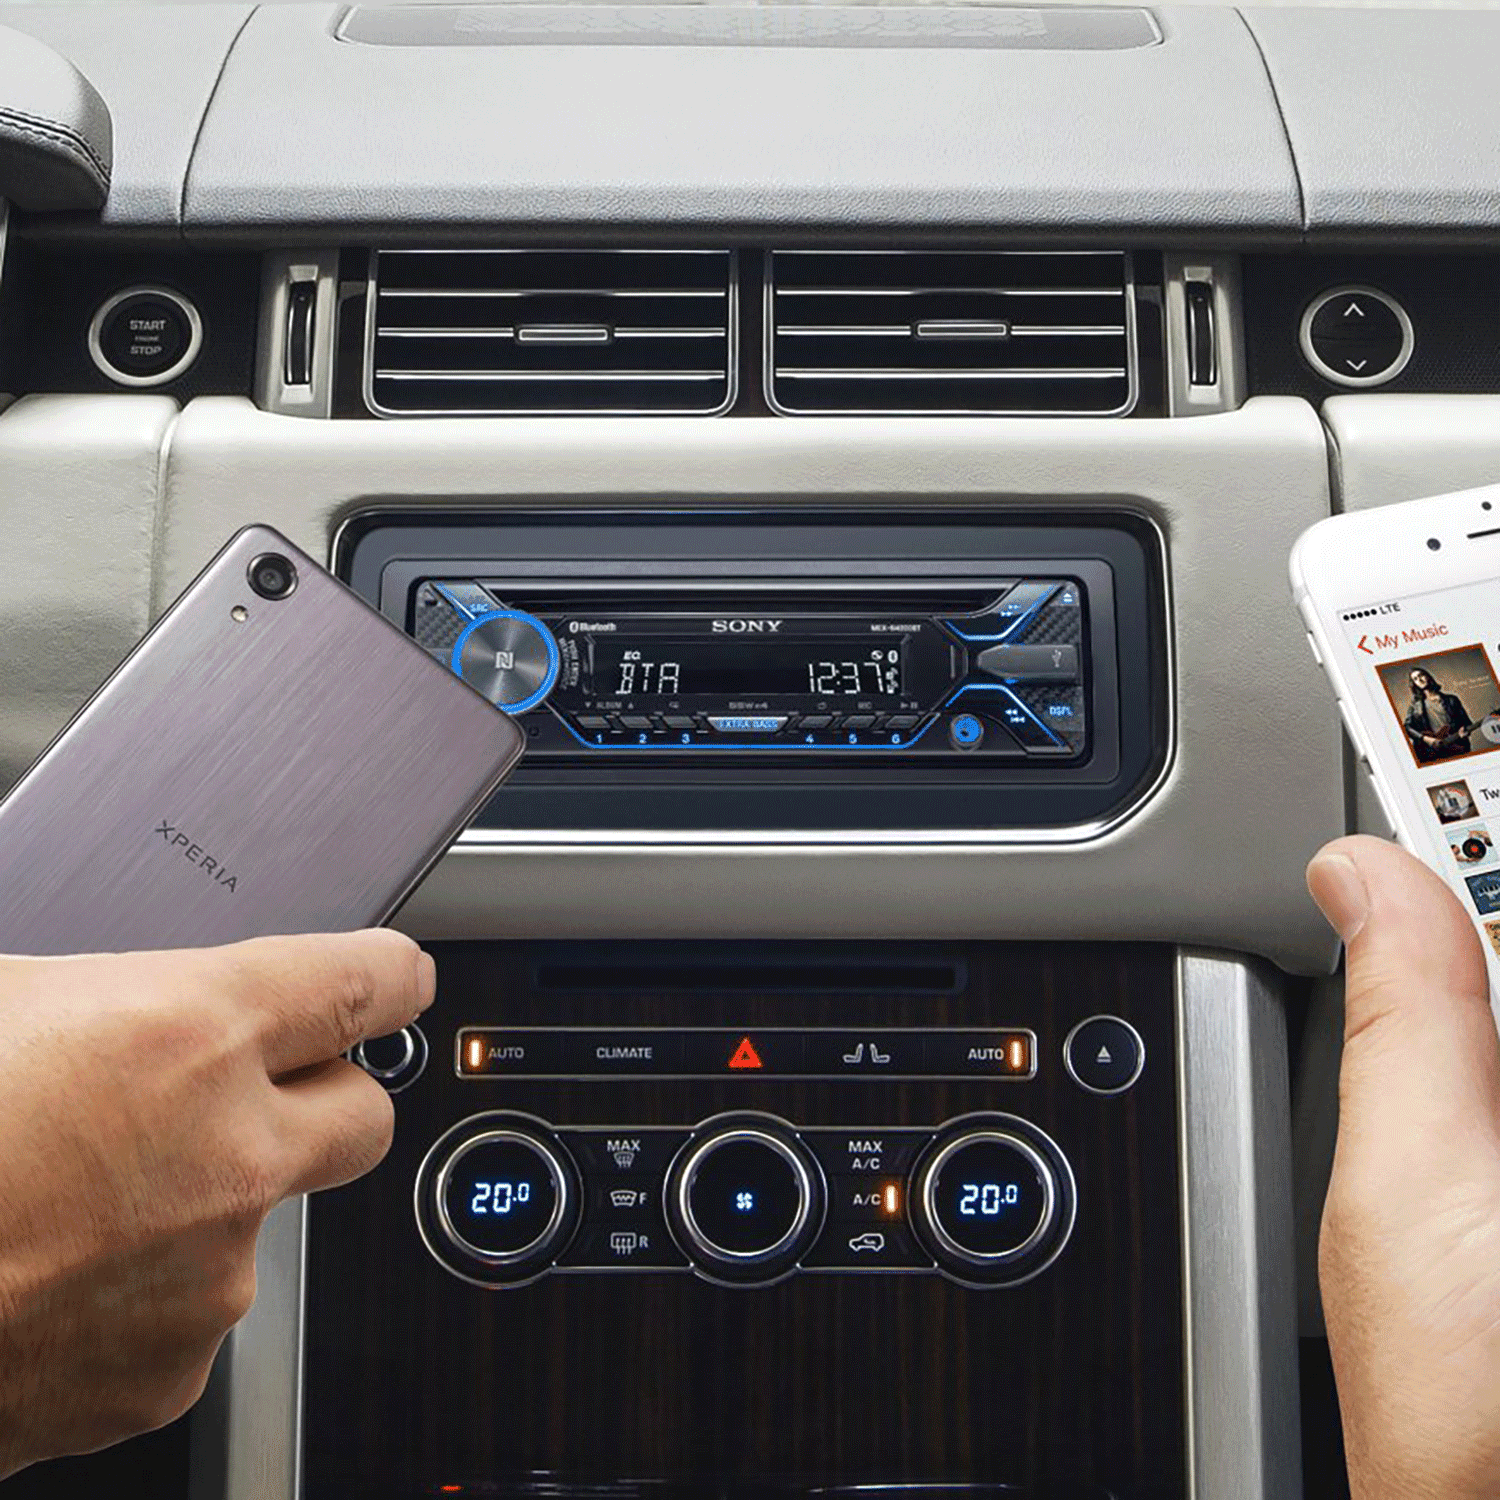 Renault Clio CD player Sony MEX-N4200BT car stereo Bluetooth Handsfree USB AUX 